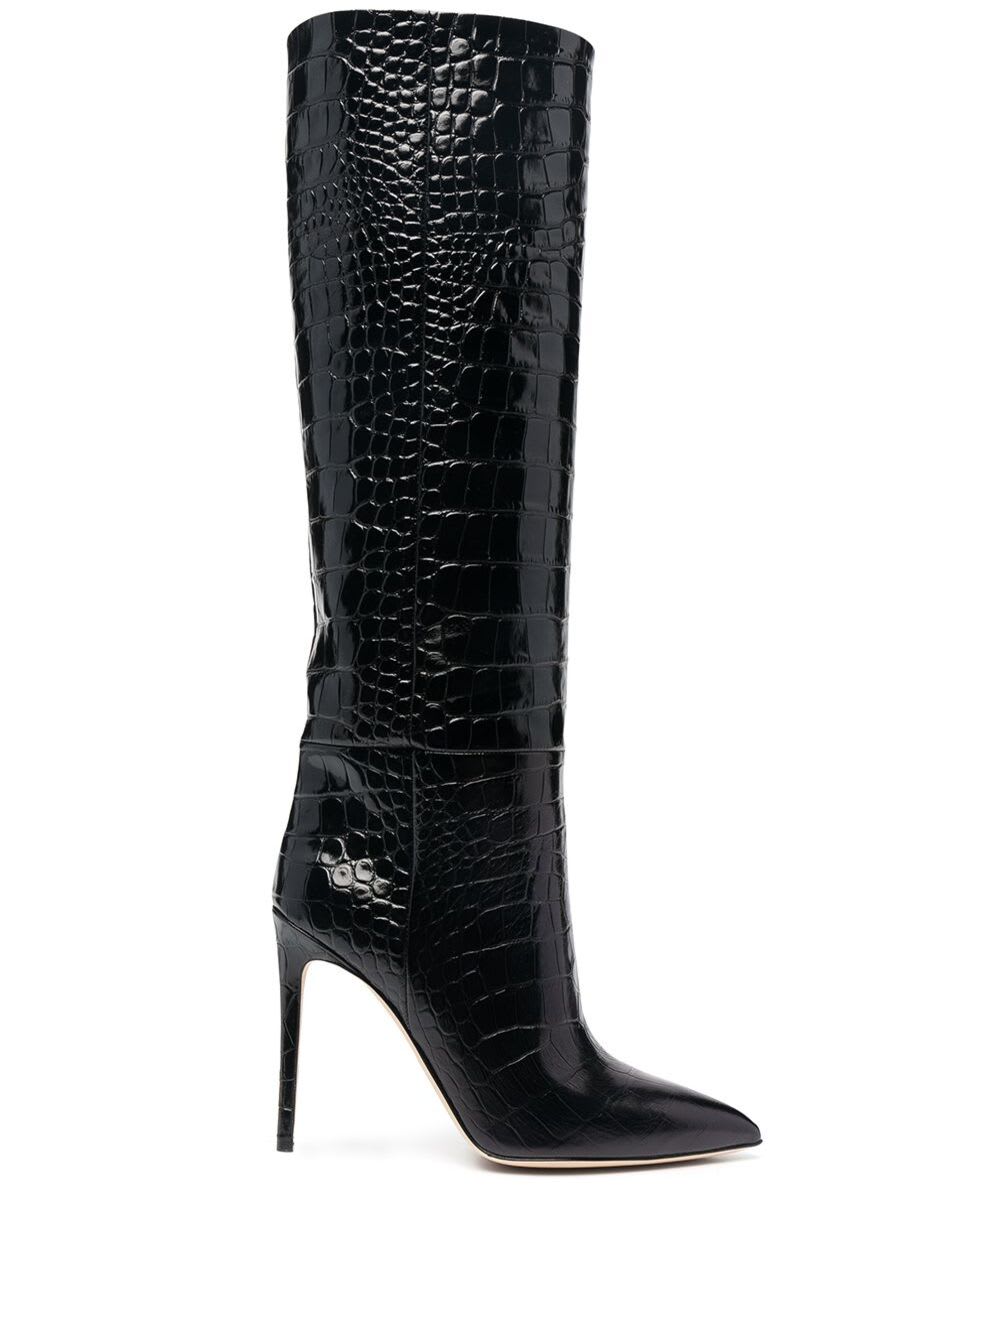 Black Crocodile Printed Leather Boots Paris Texas Woman